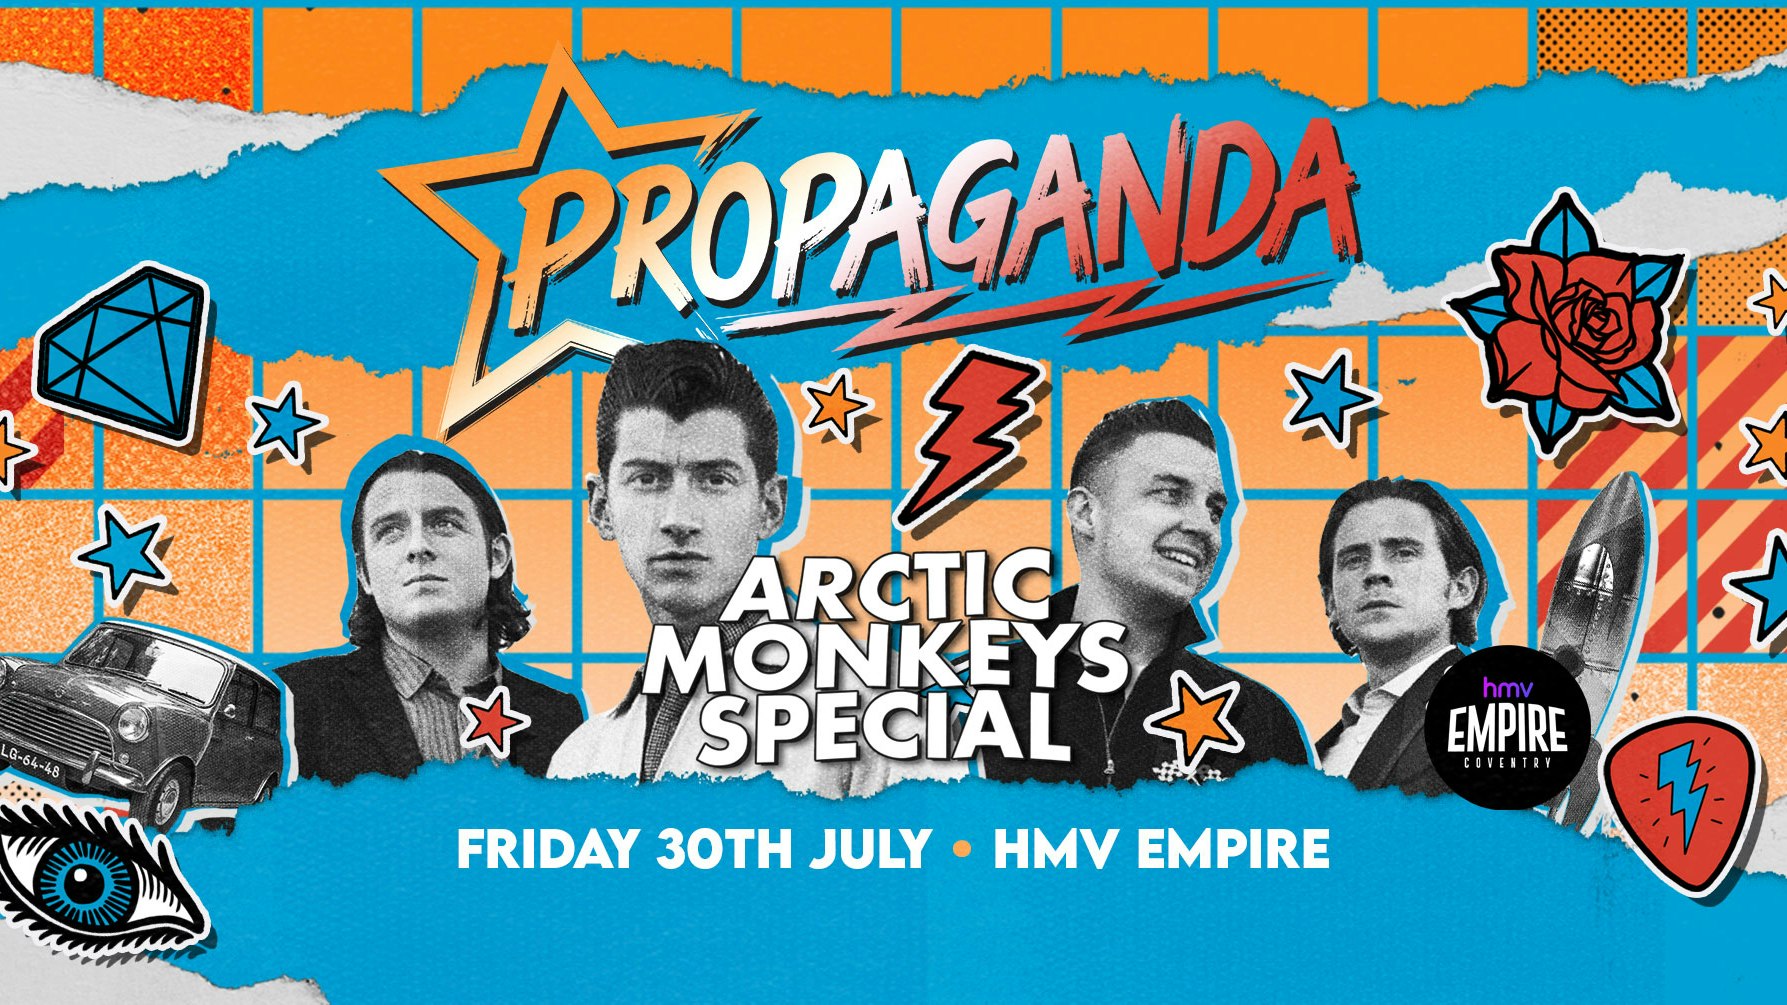 Propaganda Coventry – Arctic Monkeys Special!